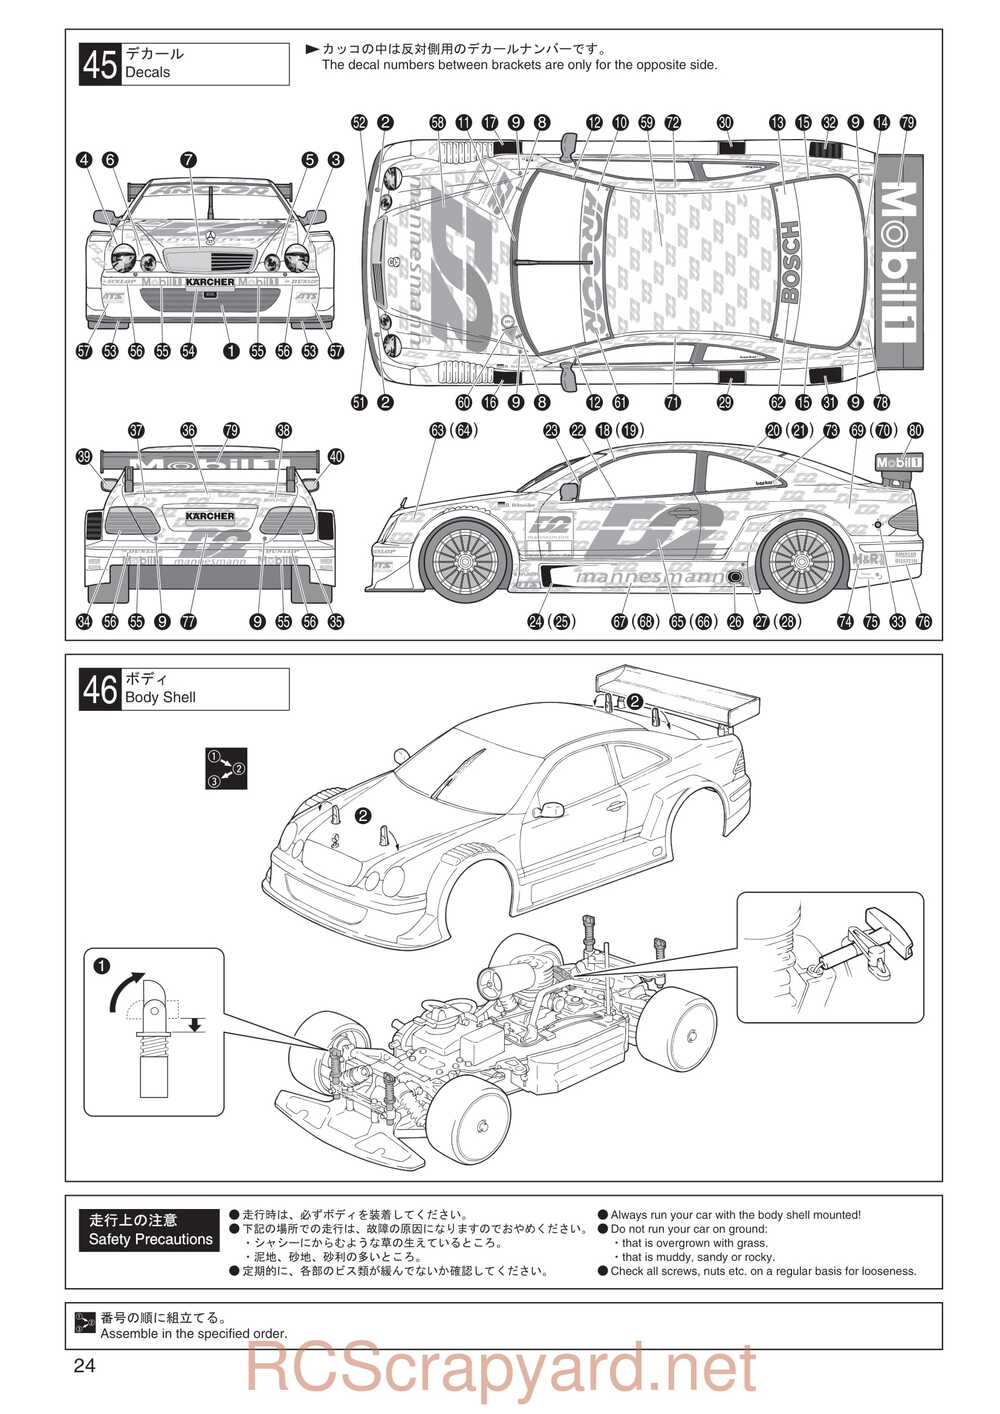 Kyosho - 31001 - GP SuperTen FW-04 - Manual - Page 24